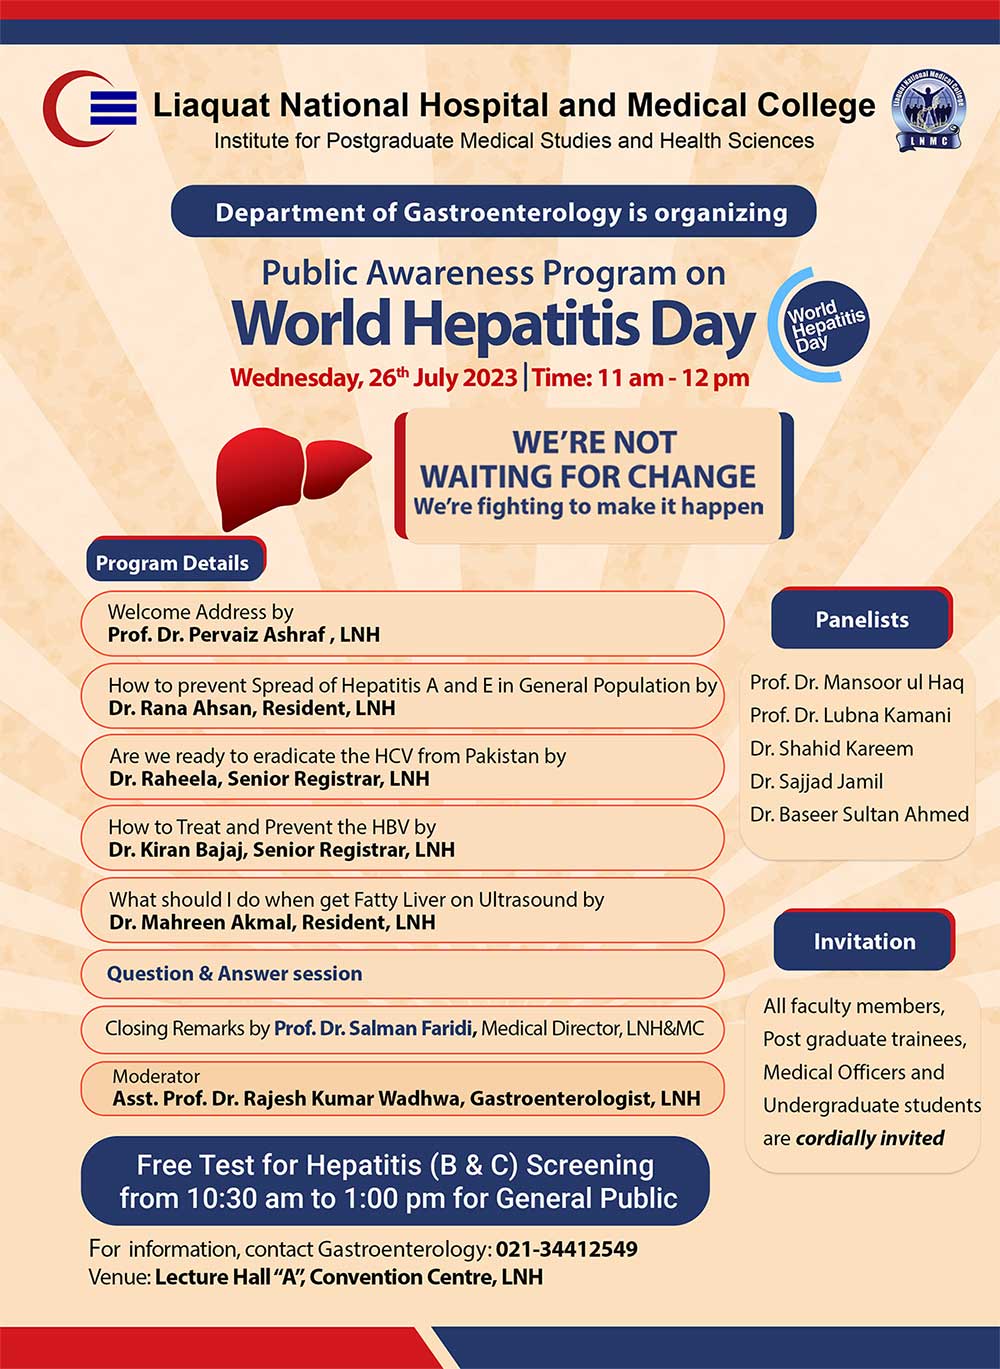 Free Hepatitis B & C Screening Test and Public Awareness Program on World Hepatitis Day 